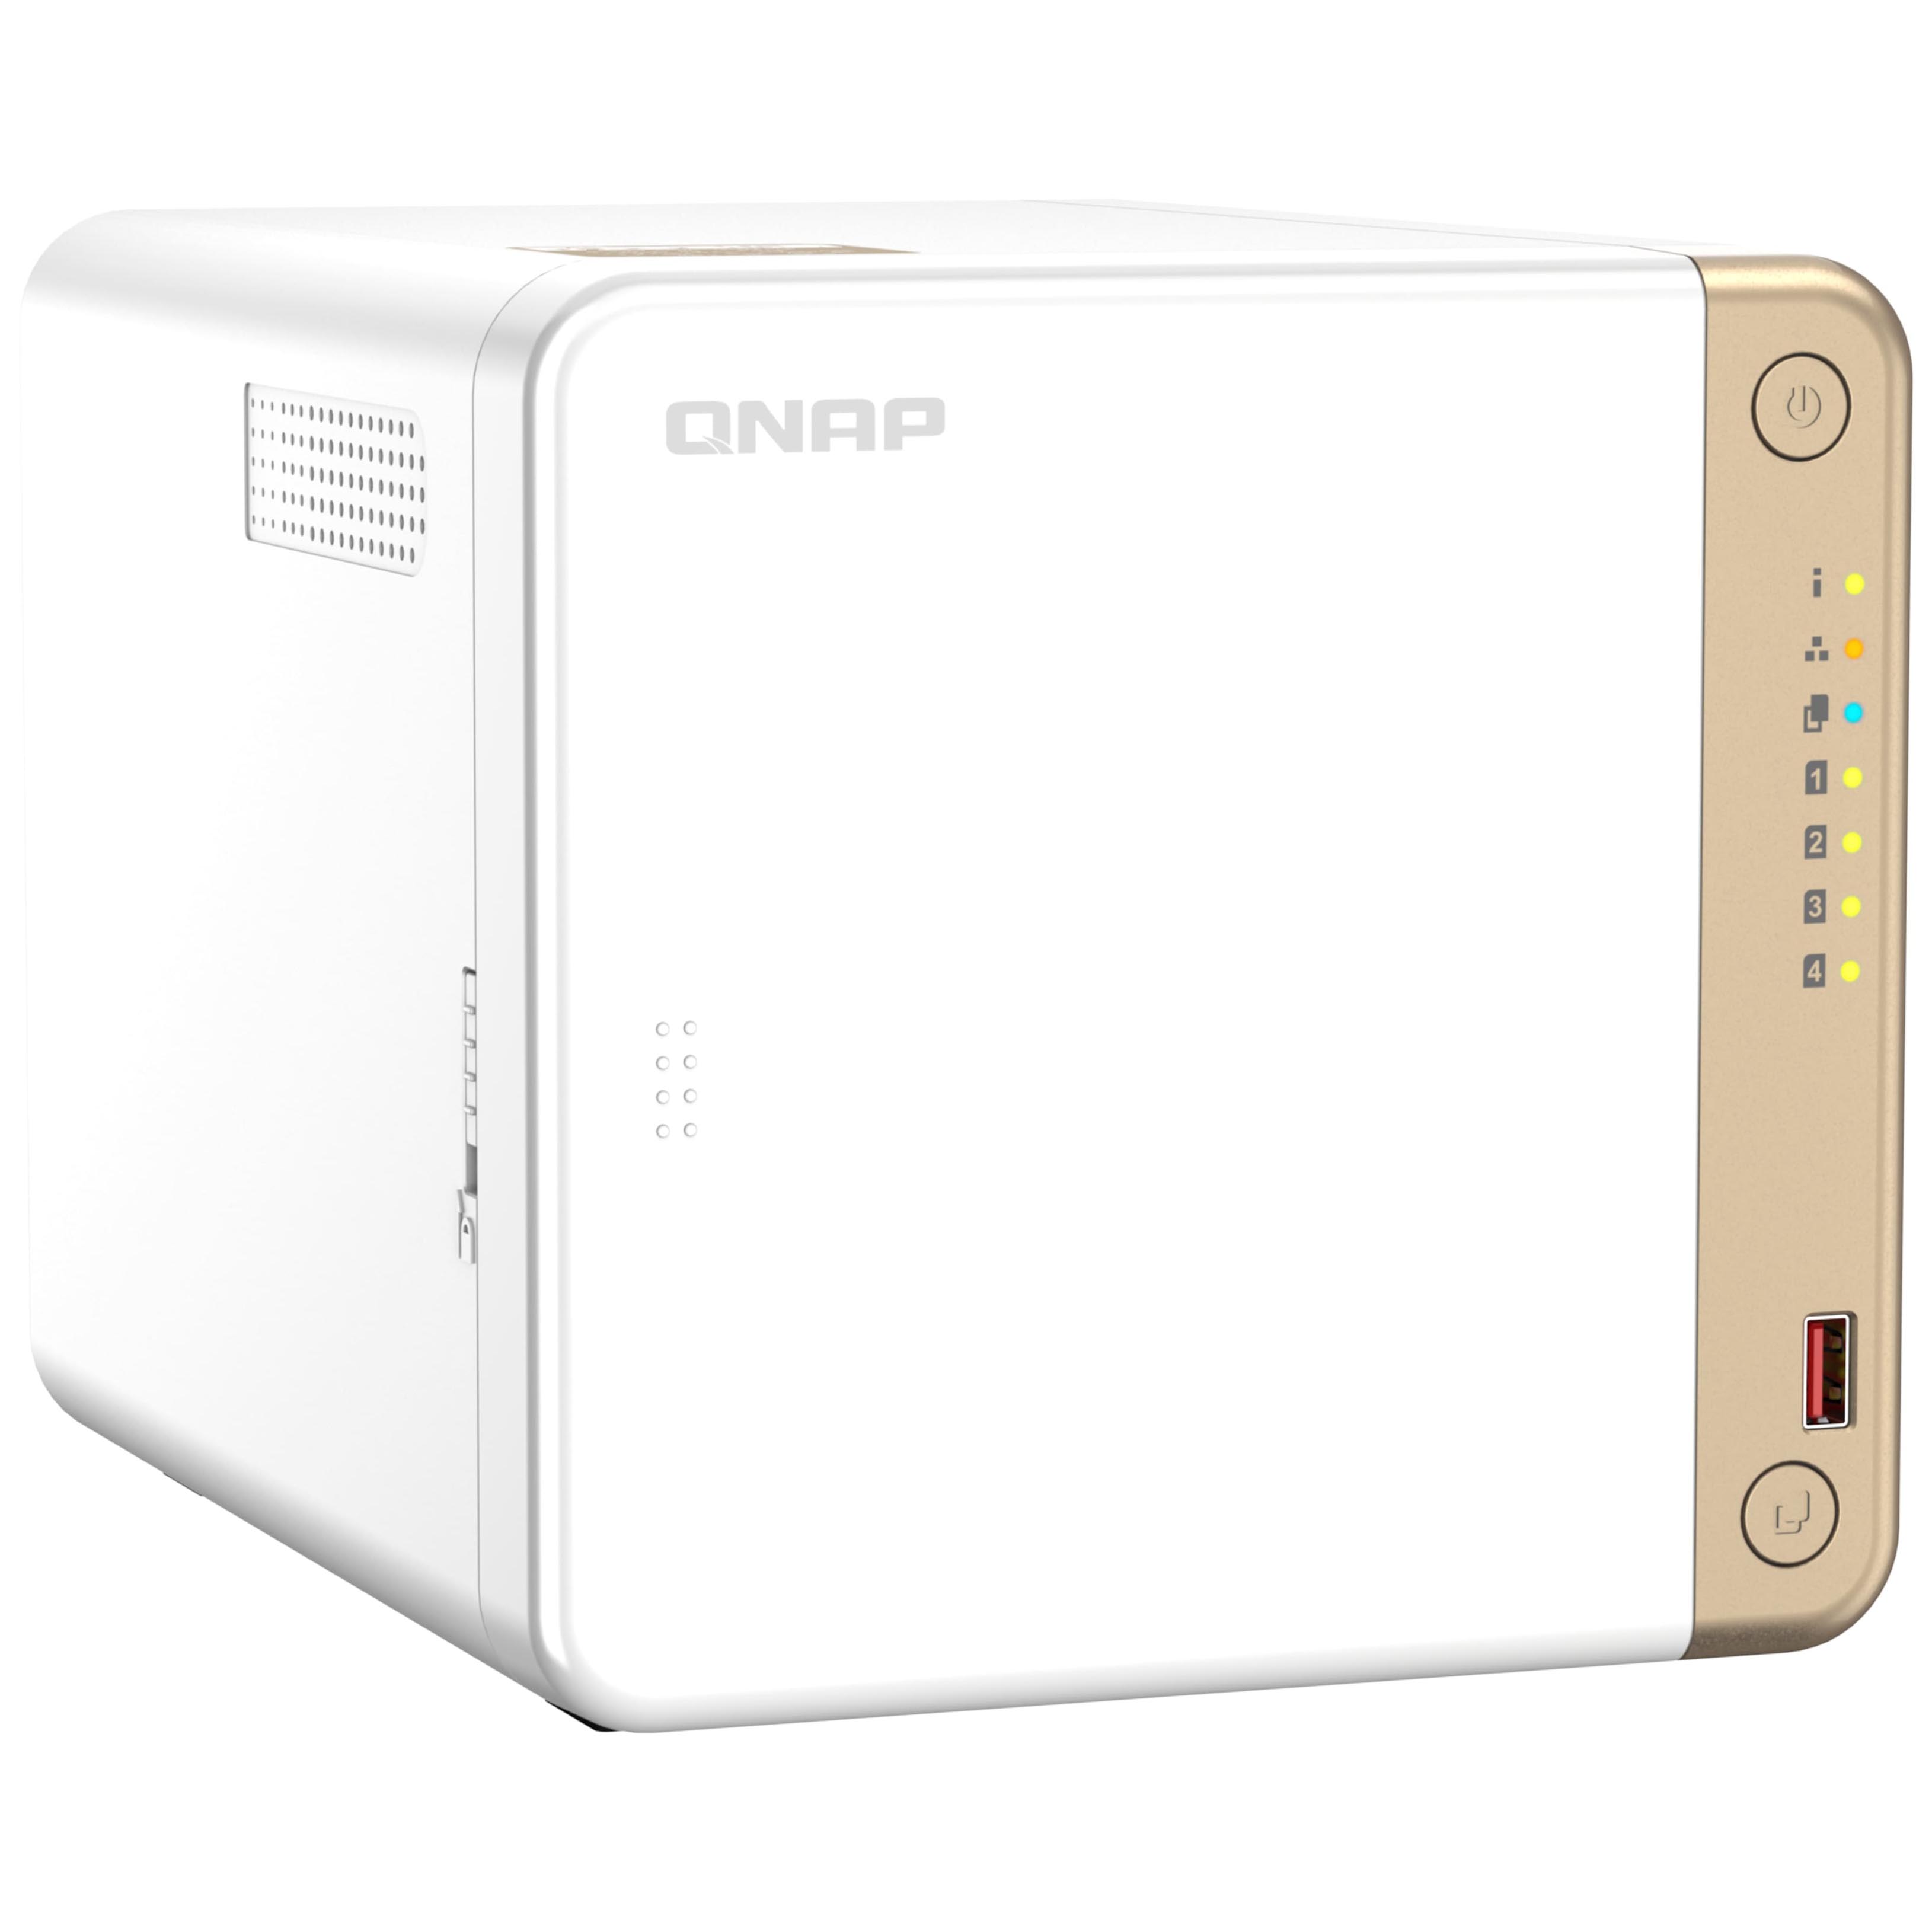 Сетевое хранилище QNAP TS-462 Nas, 4 отсека, без дисков, белый сетевое хранилище nas qnap ts 431p3 4g 4 bay